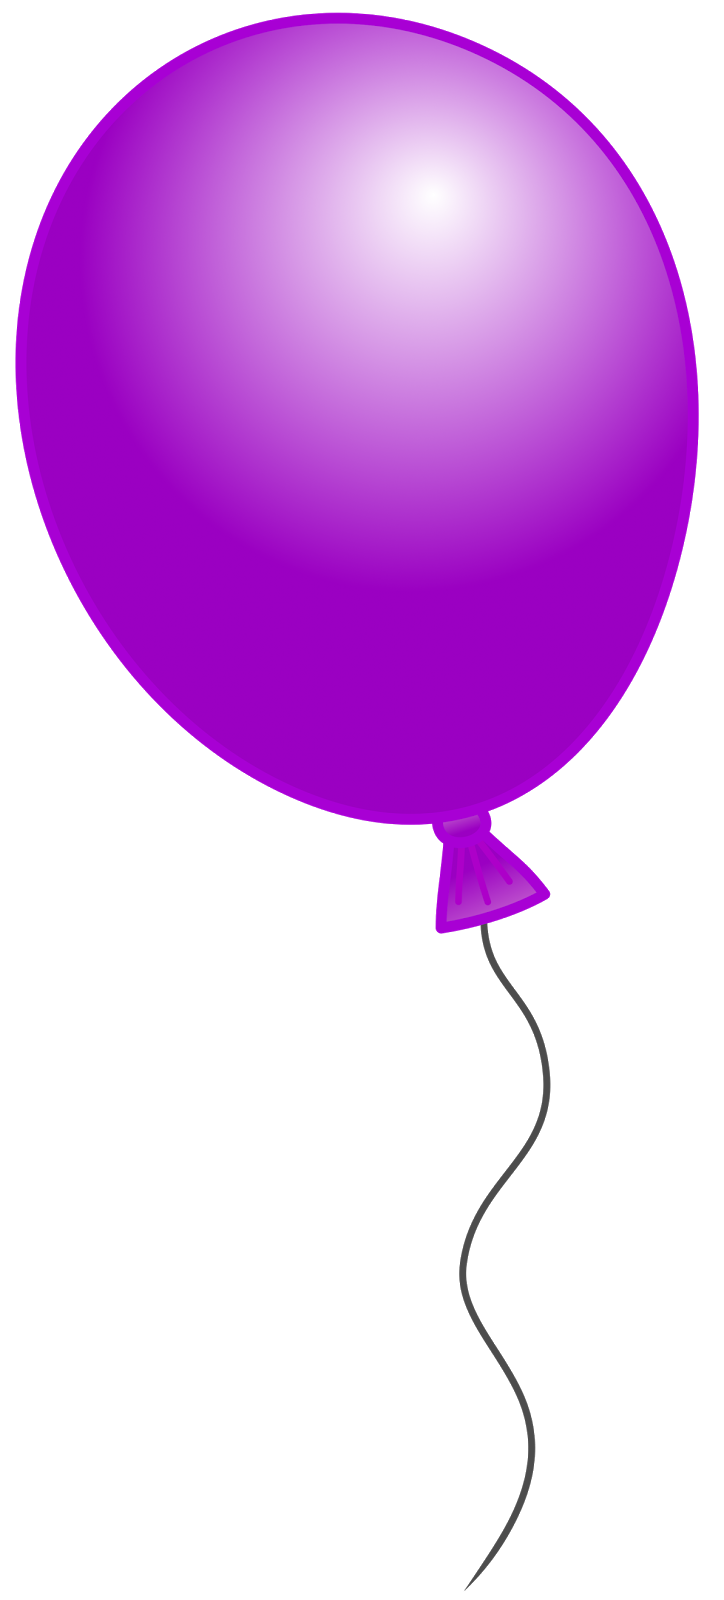 Картинка шар на прозрачном фоне. Воздушный шарик. Воздушные шары мультяшные. Шарики цветные воздушные. Шар мультяшный.